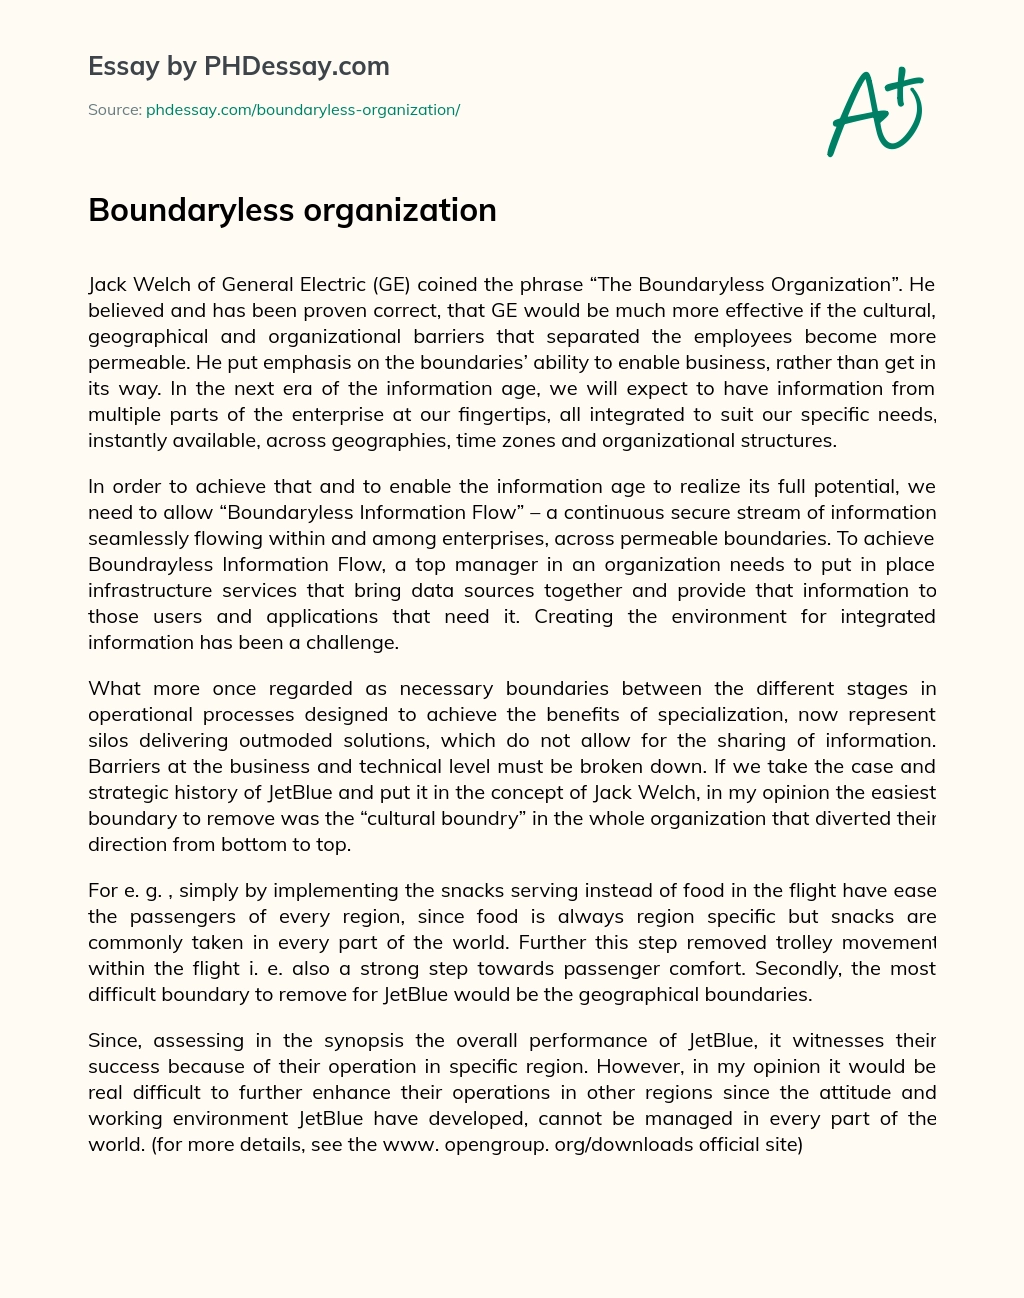 Boundaryless organization essay